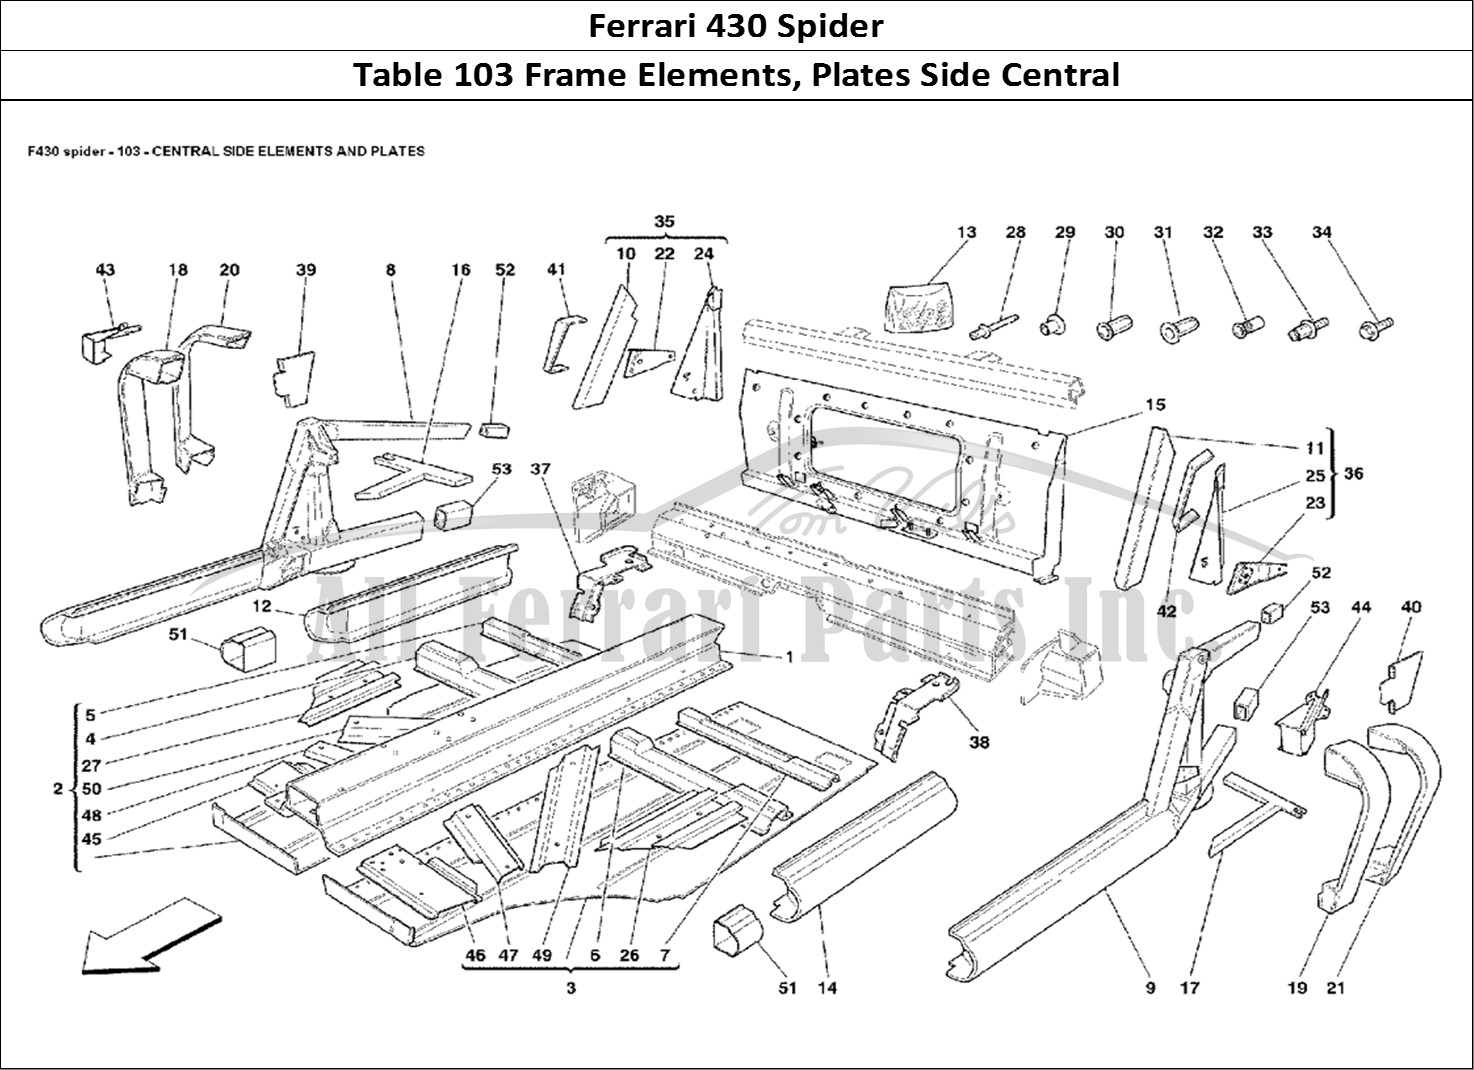 Ferrari Parts Ferrari 430 Spider Page 103 Central Side Elements and